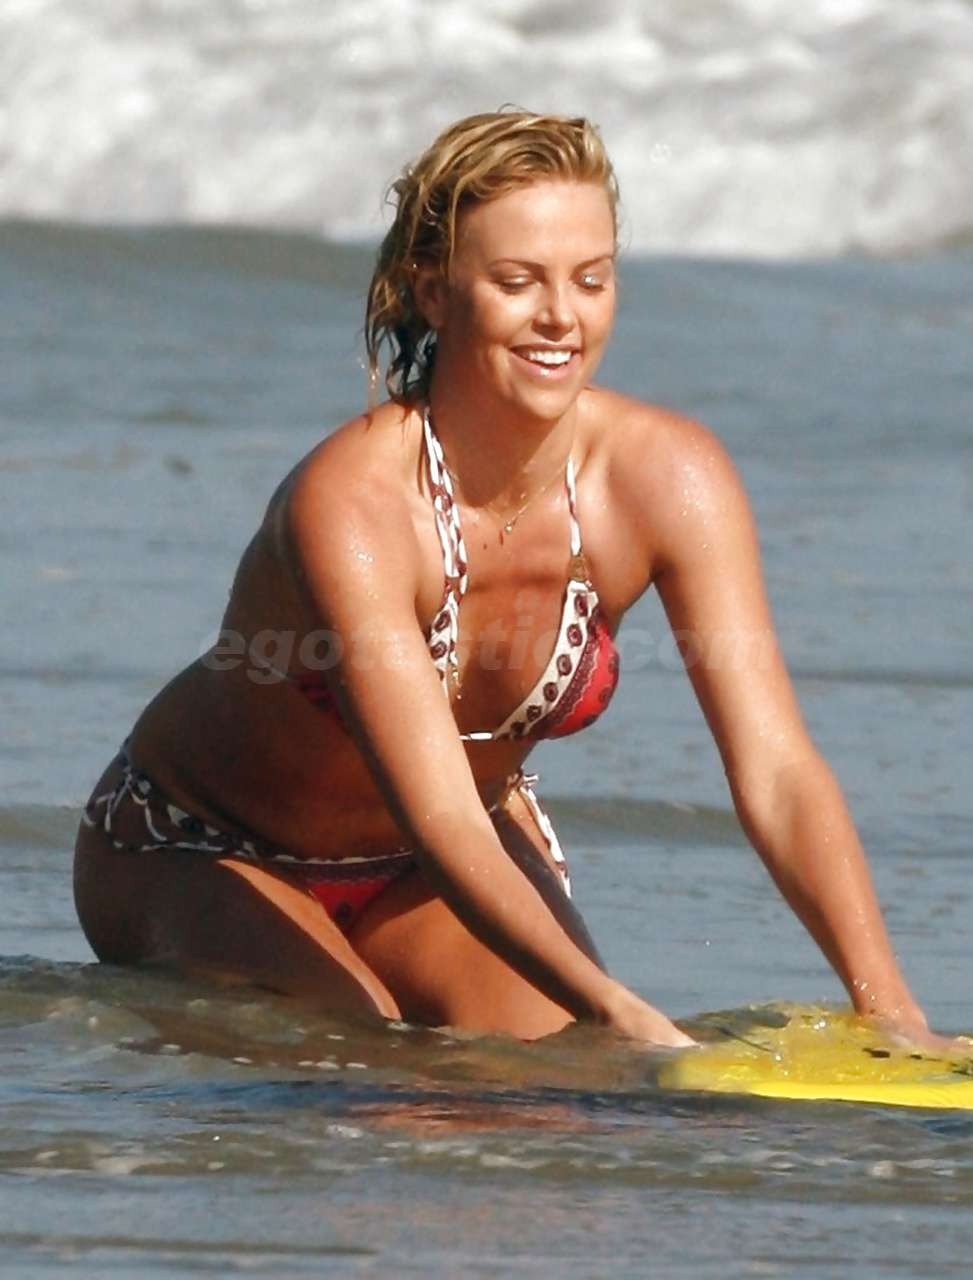 Charlize Theron enjoy playing in bikini on beach paparazzi pictures #75297224